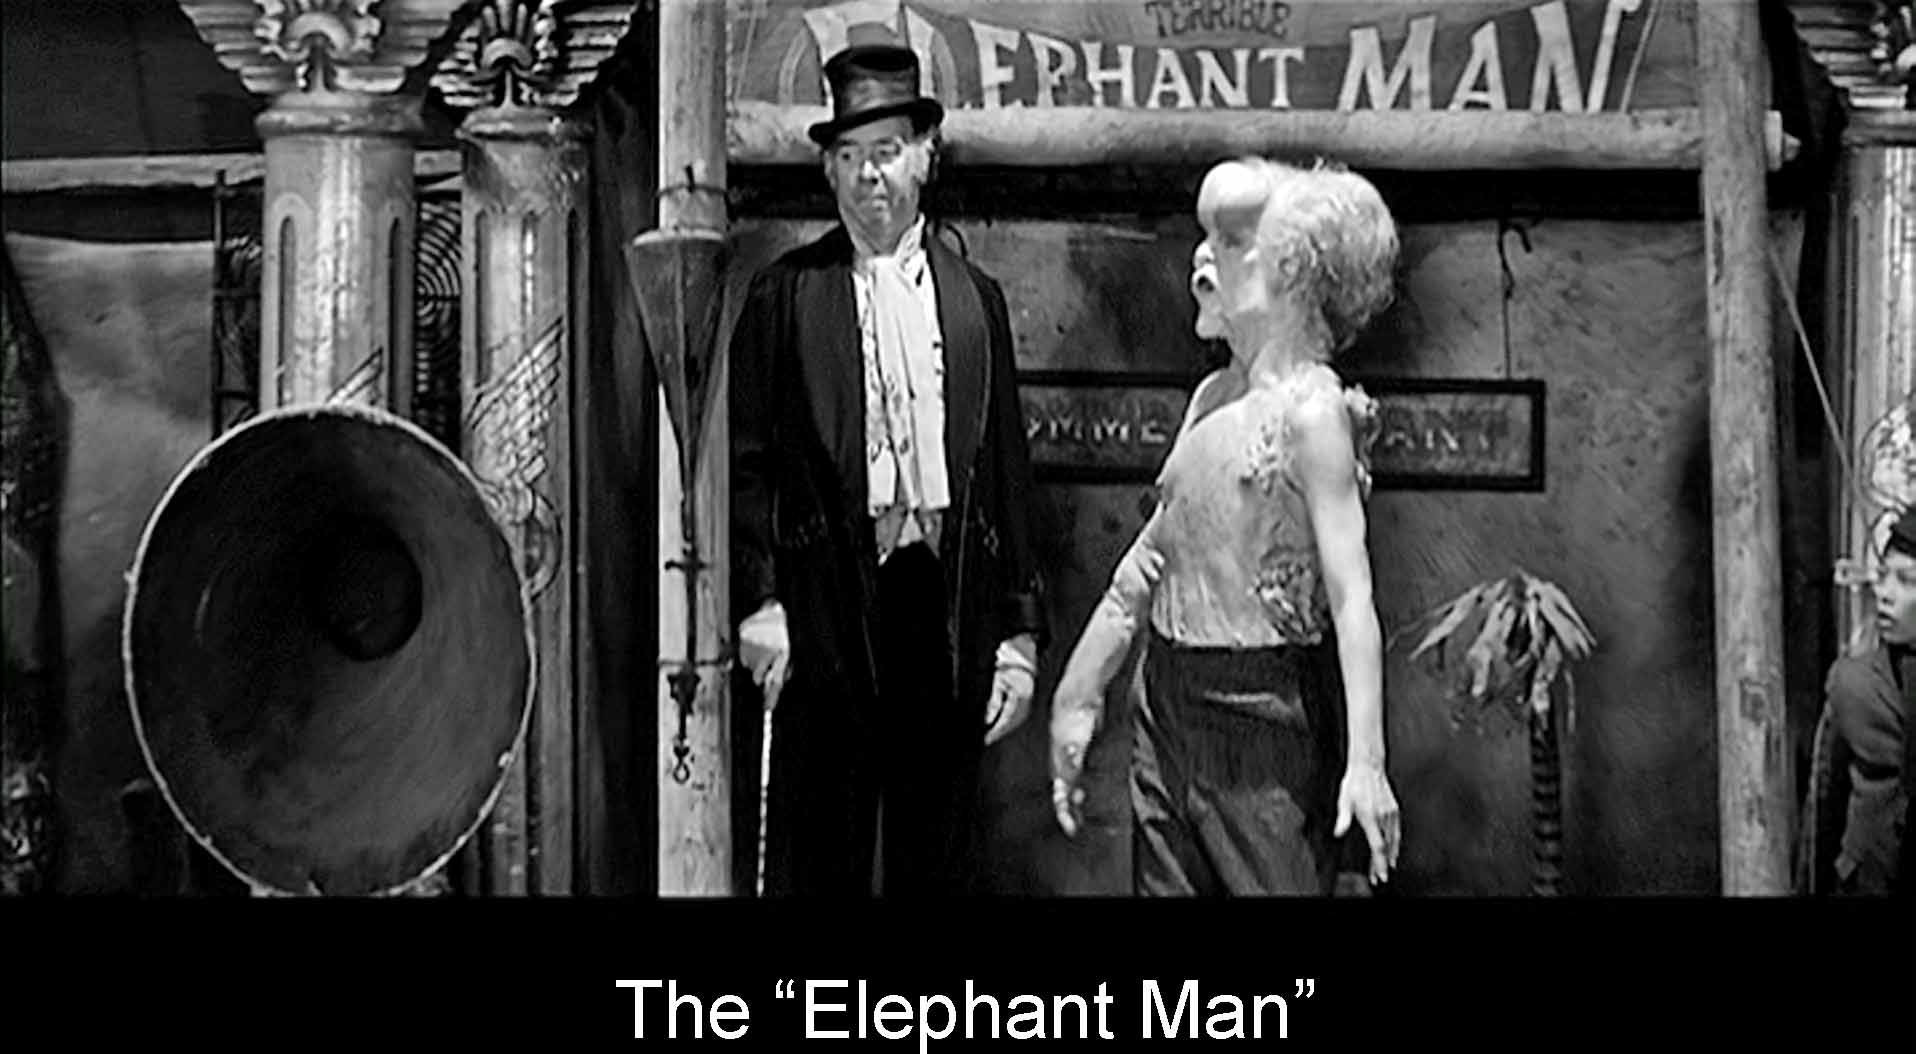  The Elephant Man